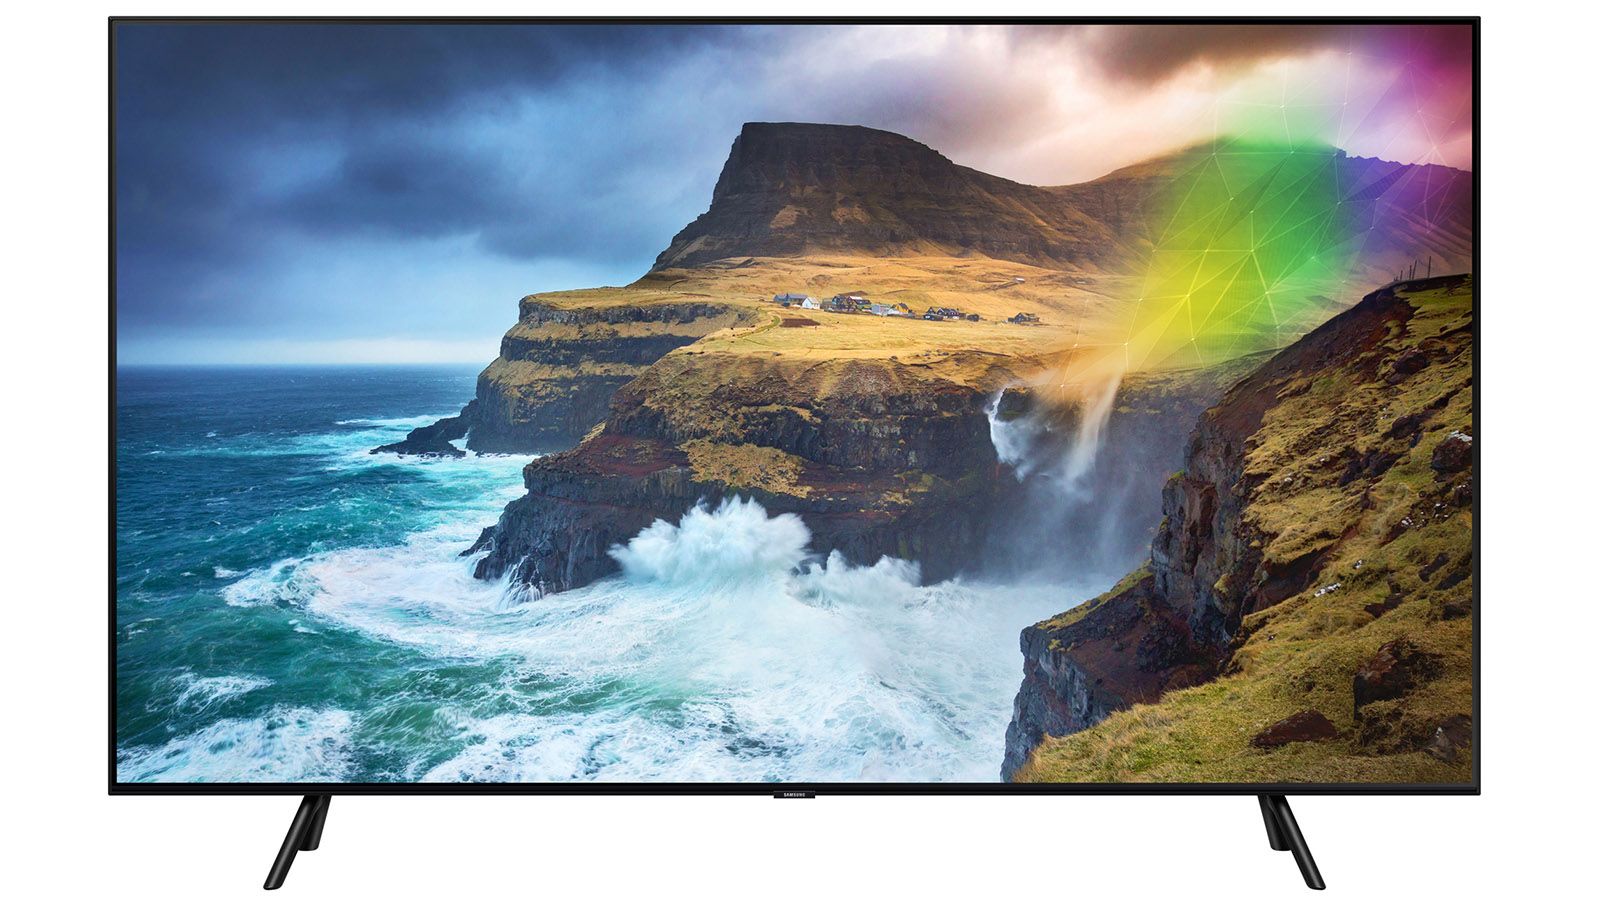 Samsung Q70R QLED TV review image 3